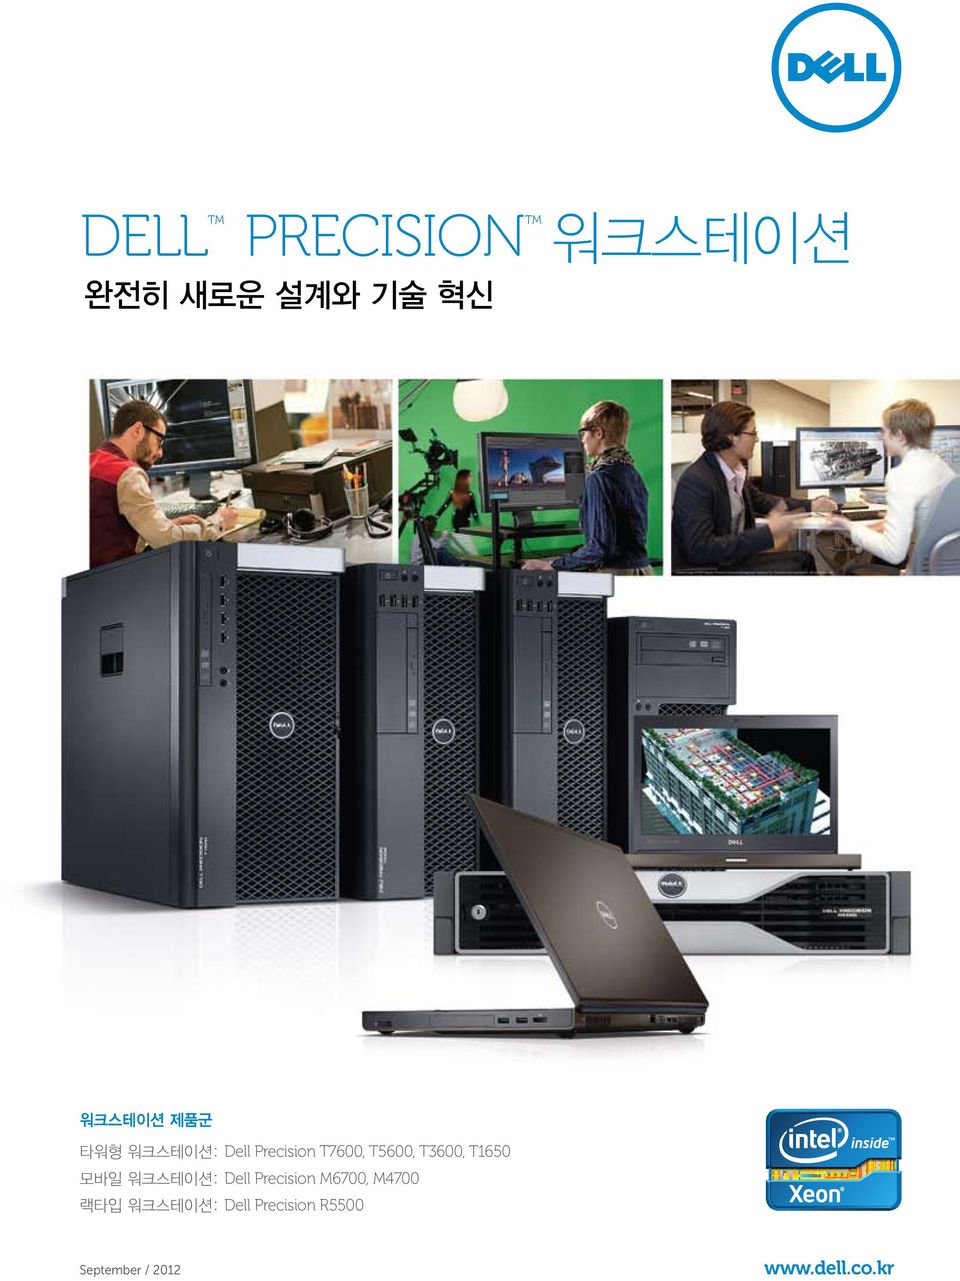 T1650 모바일 워크스테이션: Dell Precision M6700, M4700 랙타입